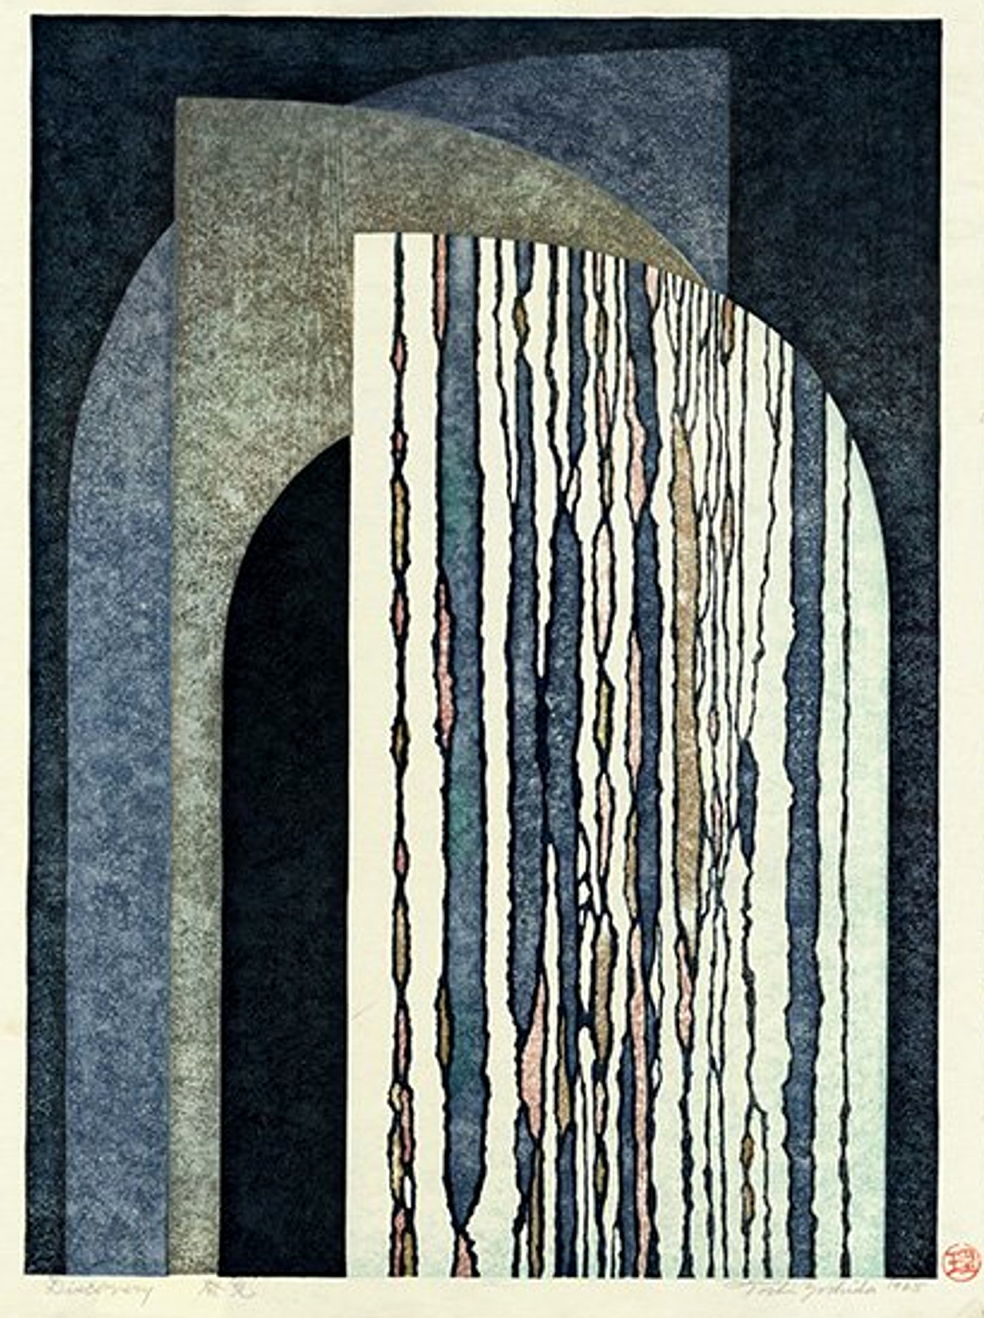 Toshi Yoshida “Discovery” 1968 woodblock print